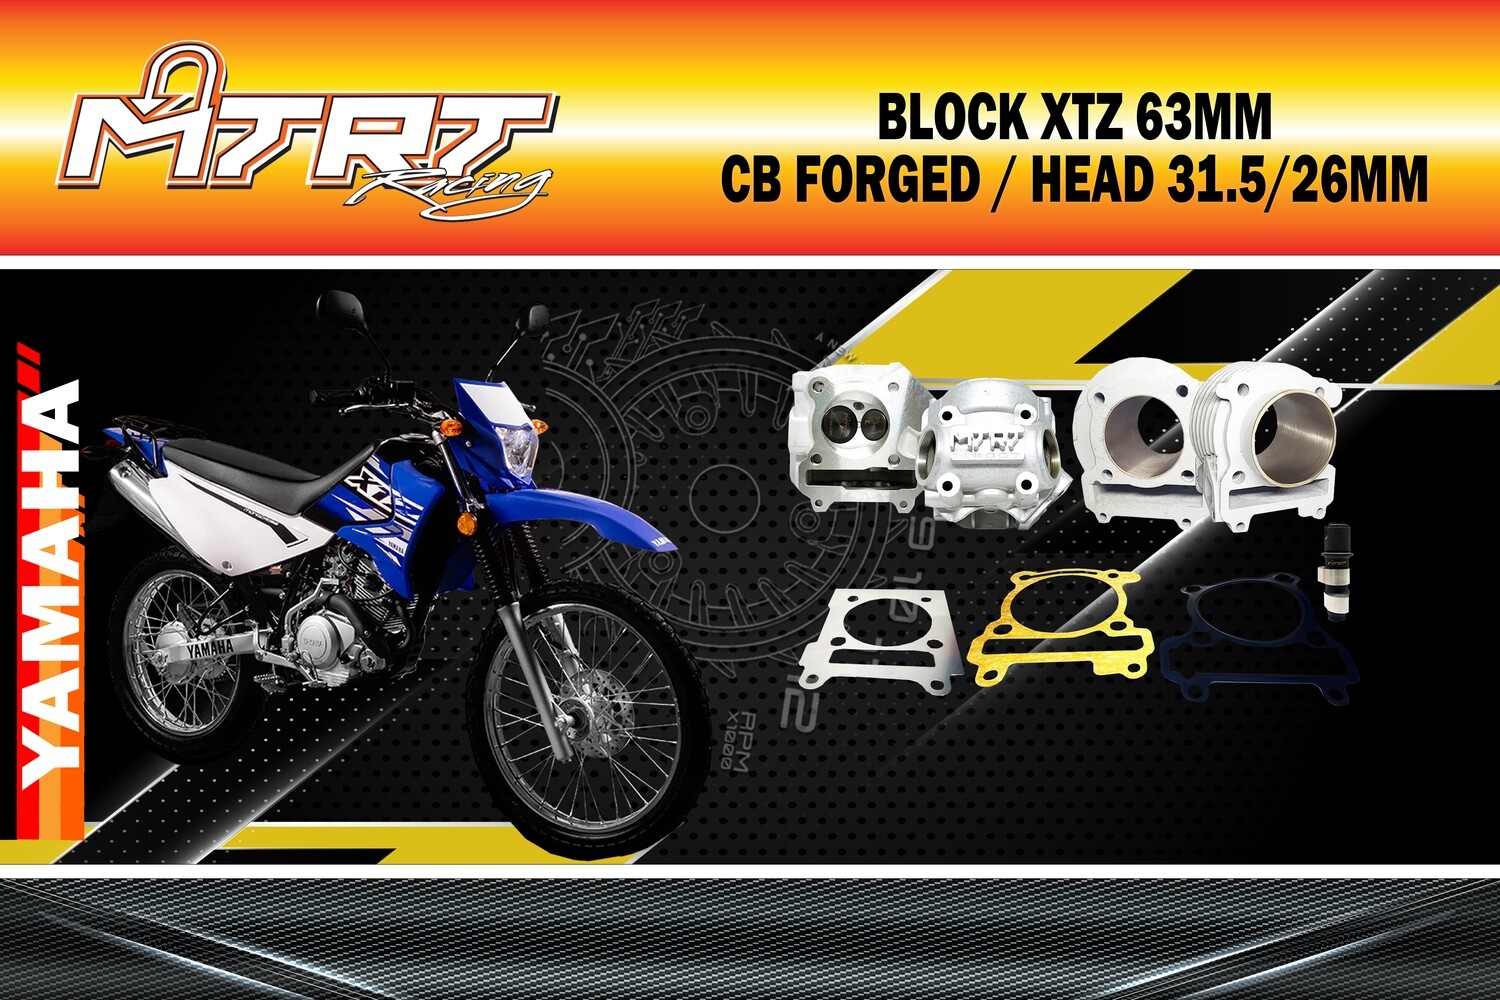 BLOCK XTZ 63mm CB Forged / Head 31.5/26mm
w/alloy gasket,St4cams MTRT